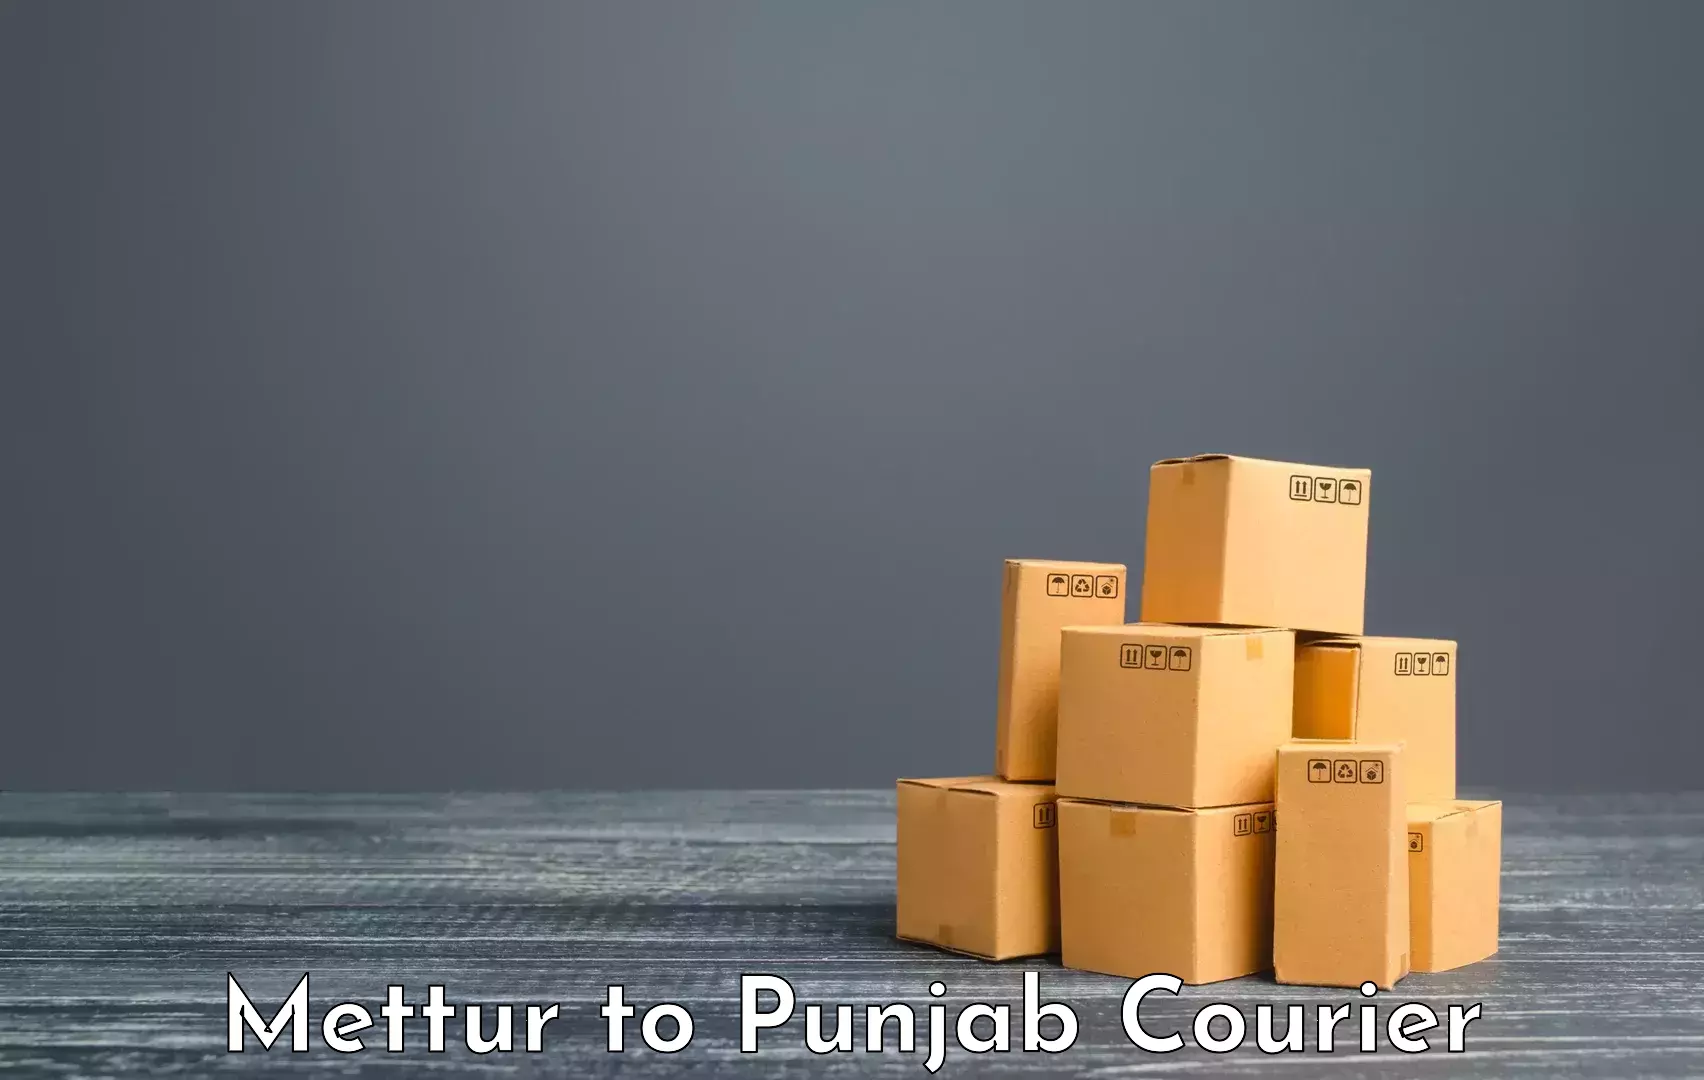 Baggage transport professionals Mettur to Punjab